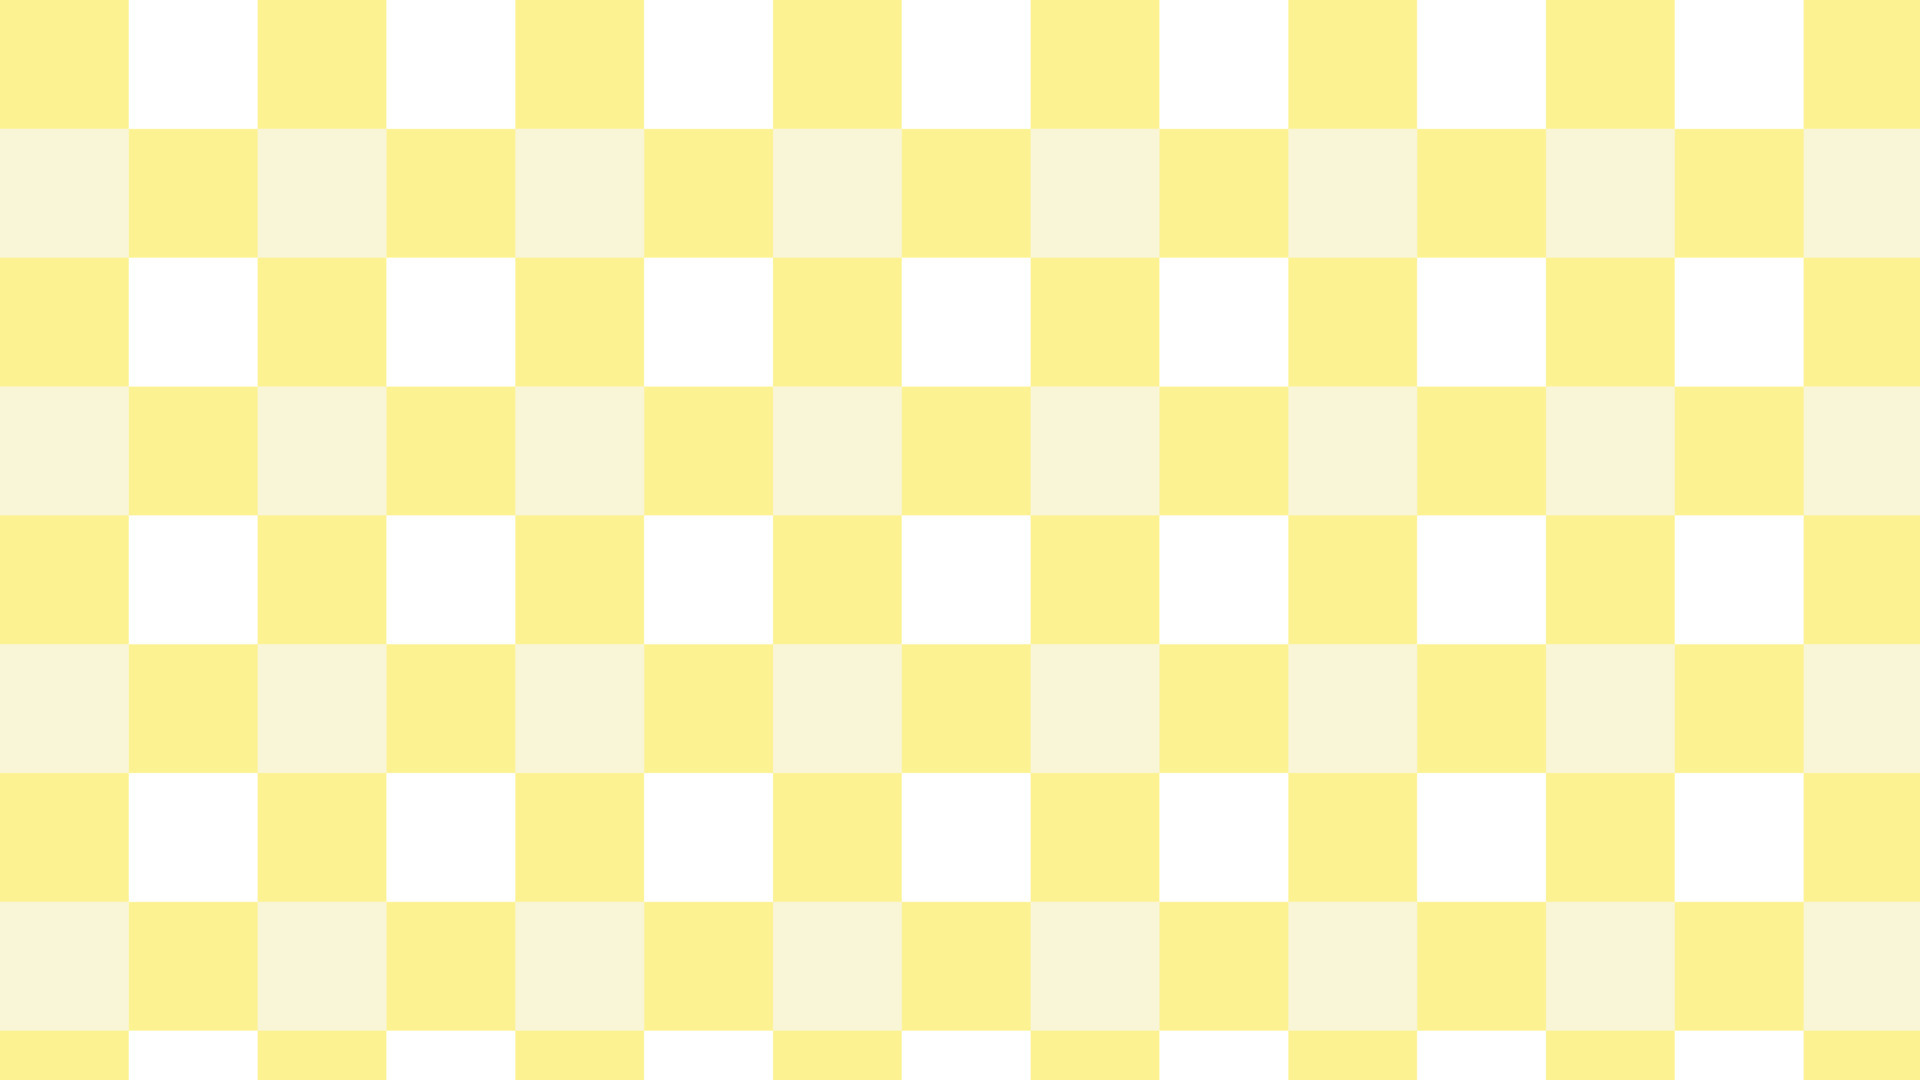 xadrez amarelo grande, xadrez, xadrez, fundo de padrão tartan, perfeito  para papel de parede, pano de fundo, cartão postal, plano de fundo 9924592  Vetor no Vecteezy